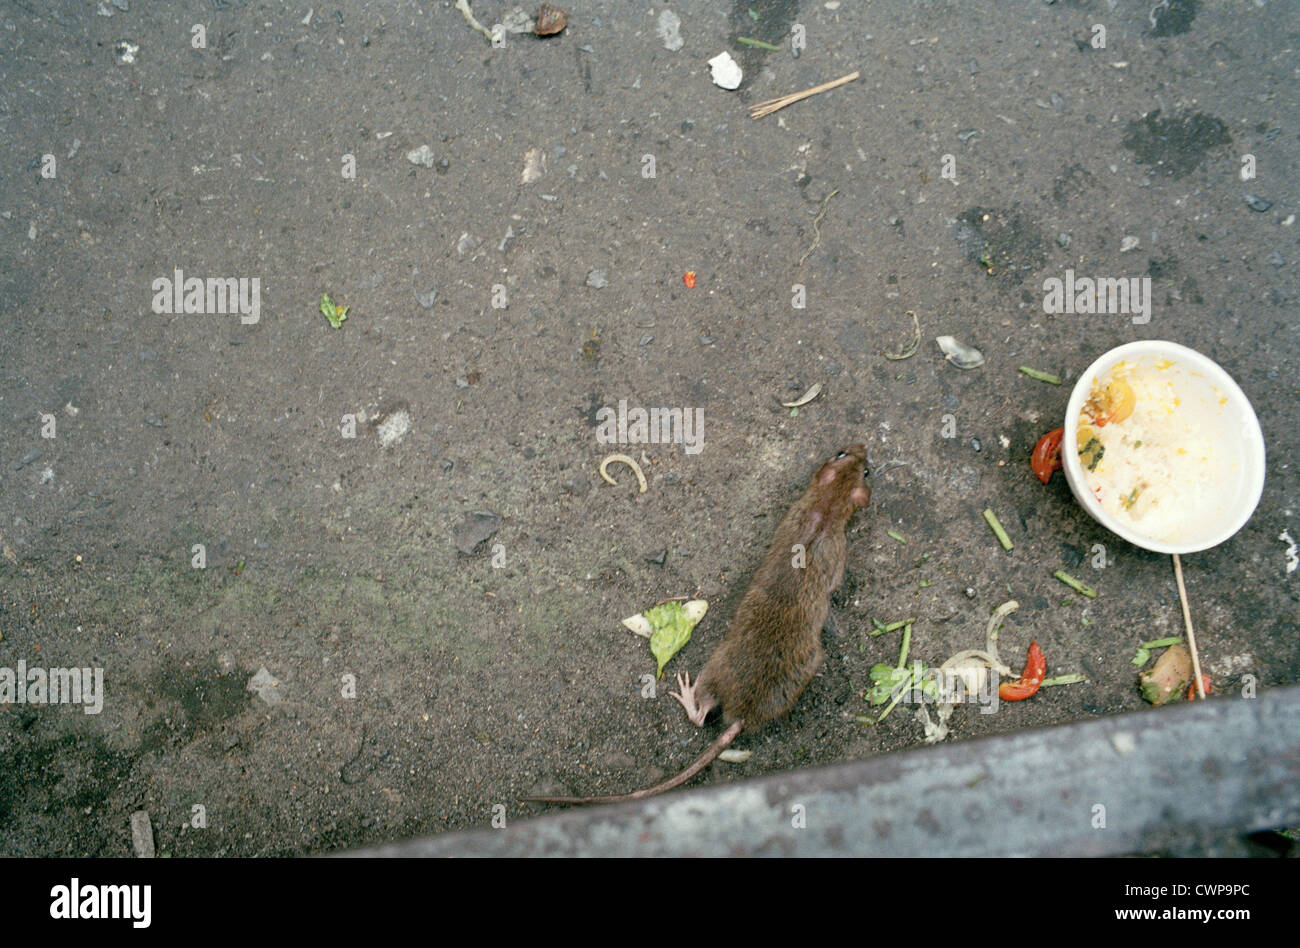 Street rat vermin feeding in the gutter in Bangkok in Thailand in Far East Southeast Asia. Rats Rodent Disease Slum Dirt Urban City Travel Stock Photo